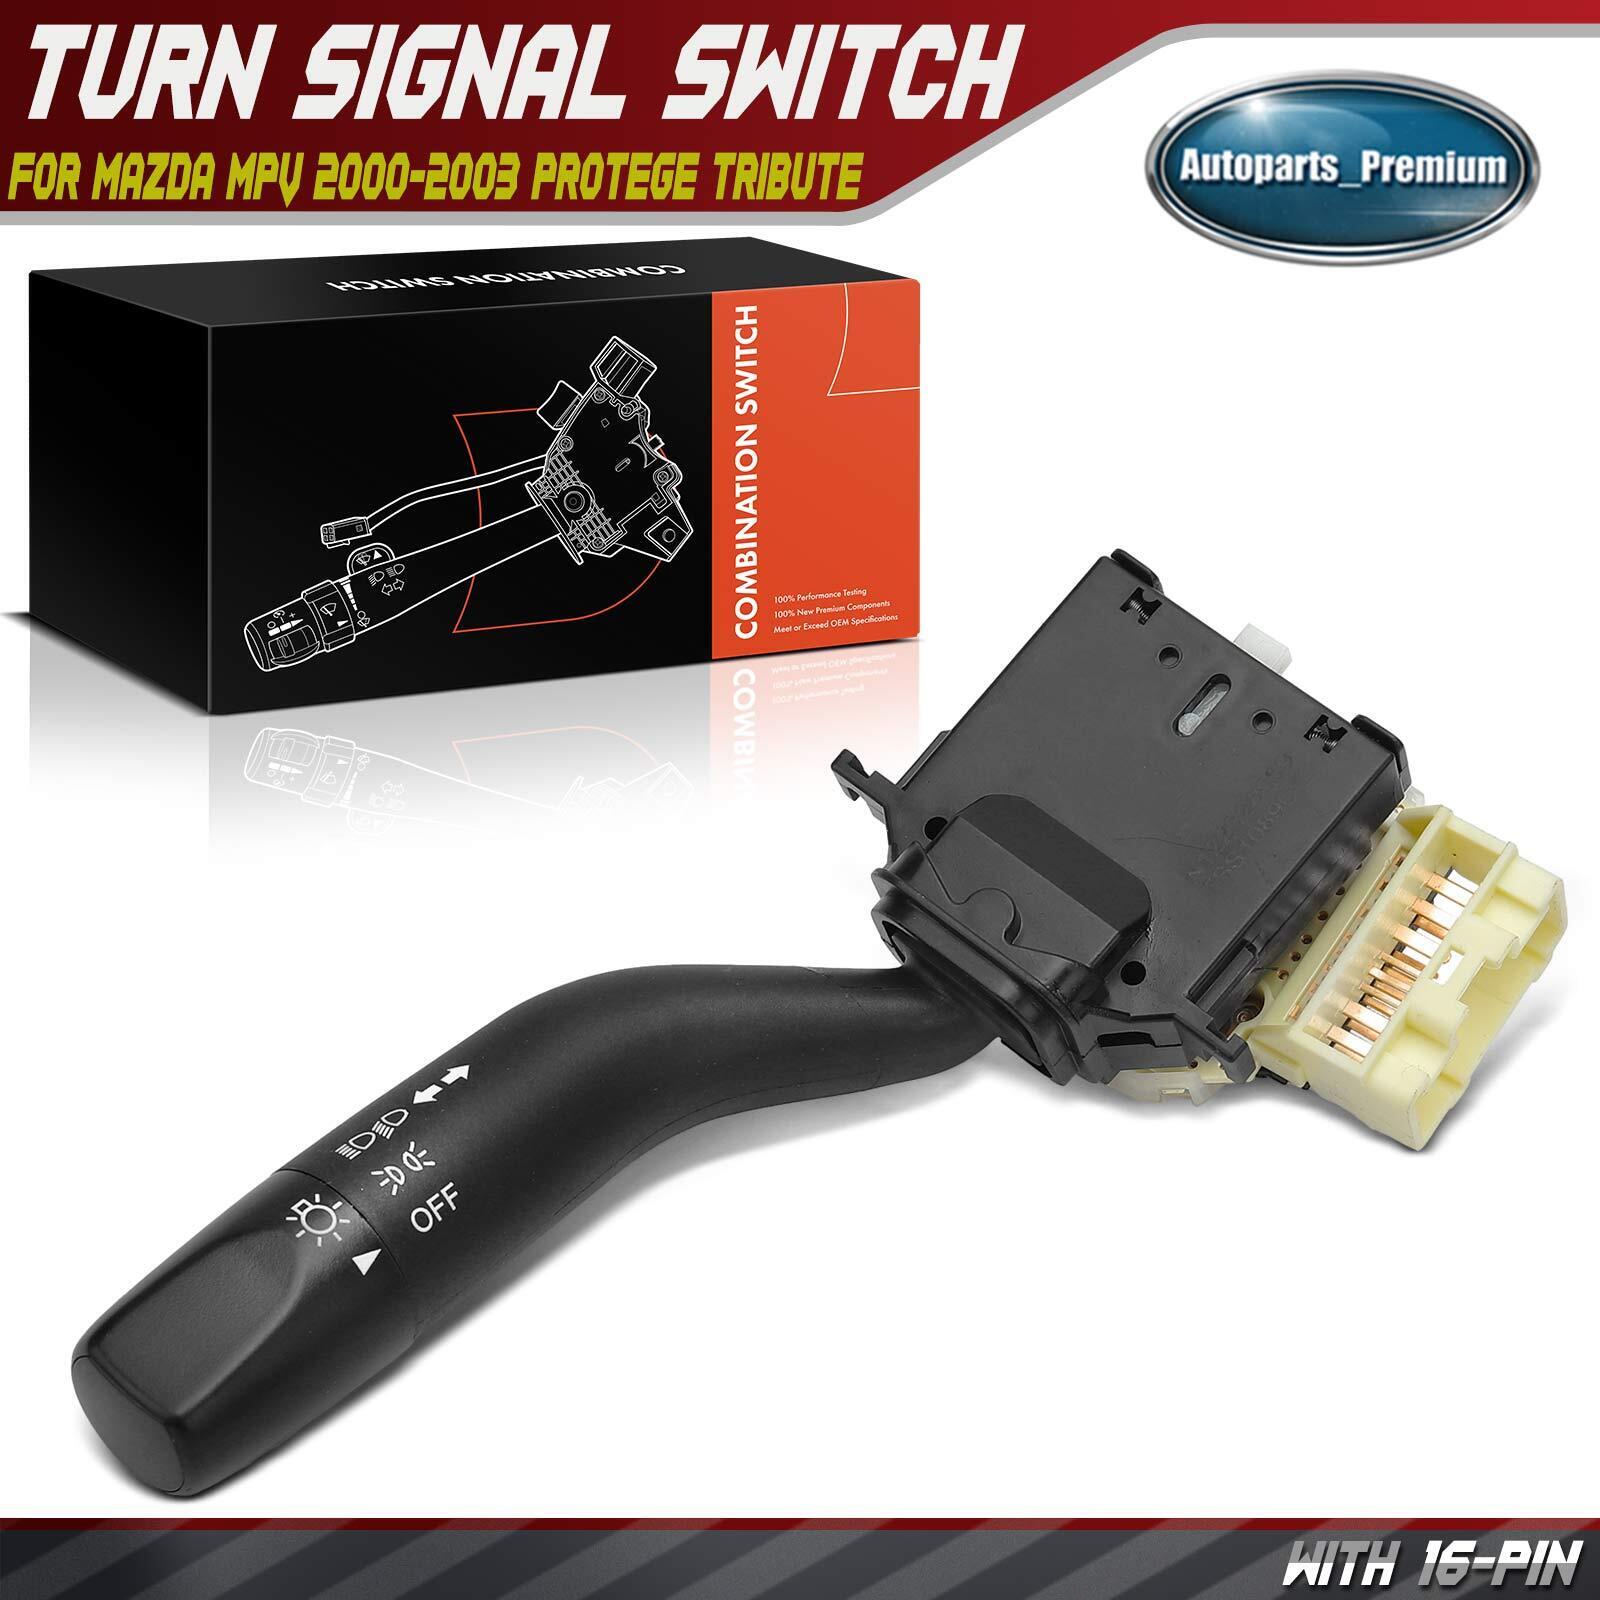 Turn Signal Switch for Mazda MPV 2000-2003 Protege 1999-2003 Tribute 2001-2002